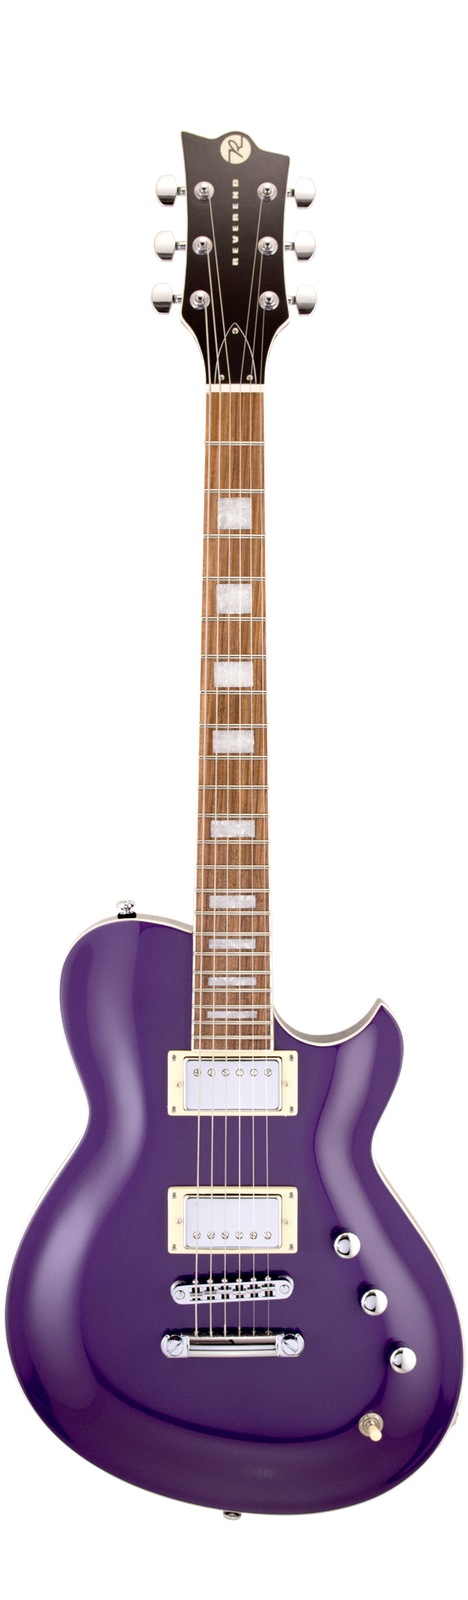 Reverend Roundhouse Electric Guitar - Italian Purple